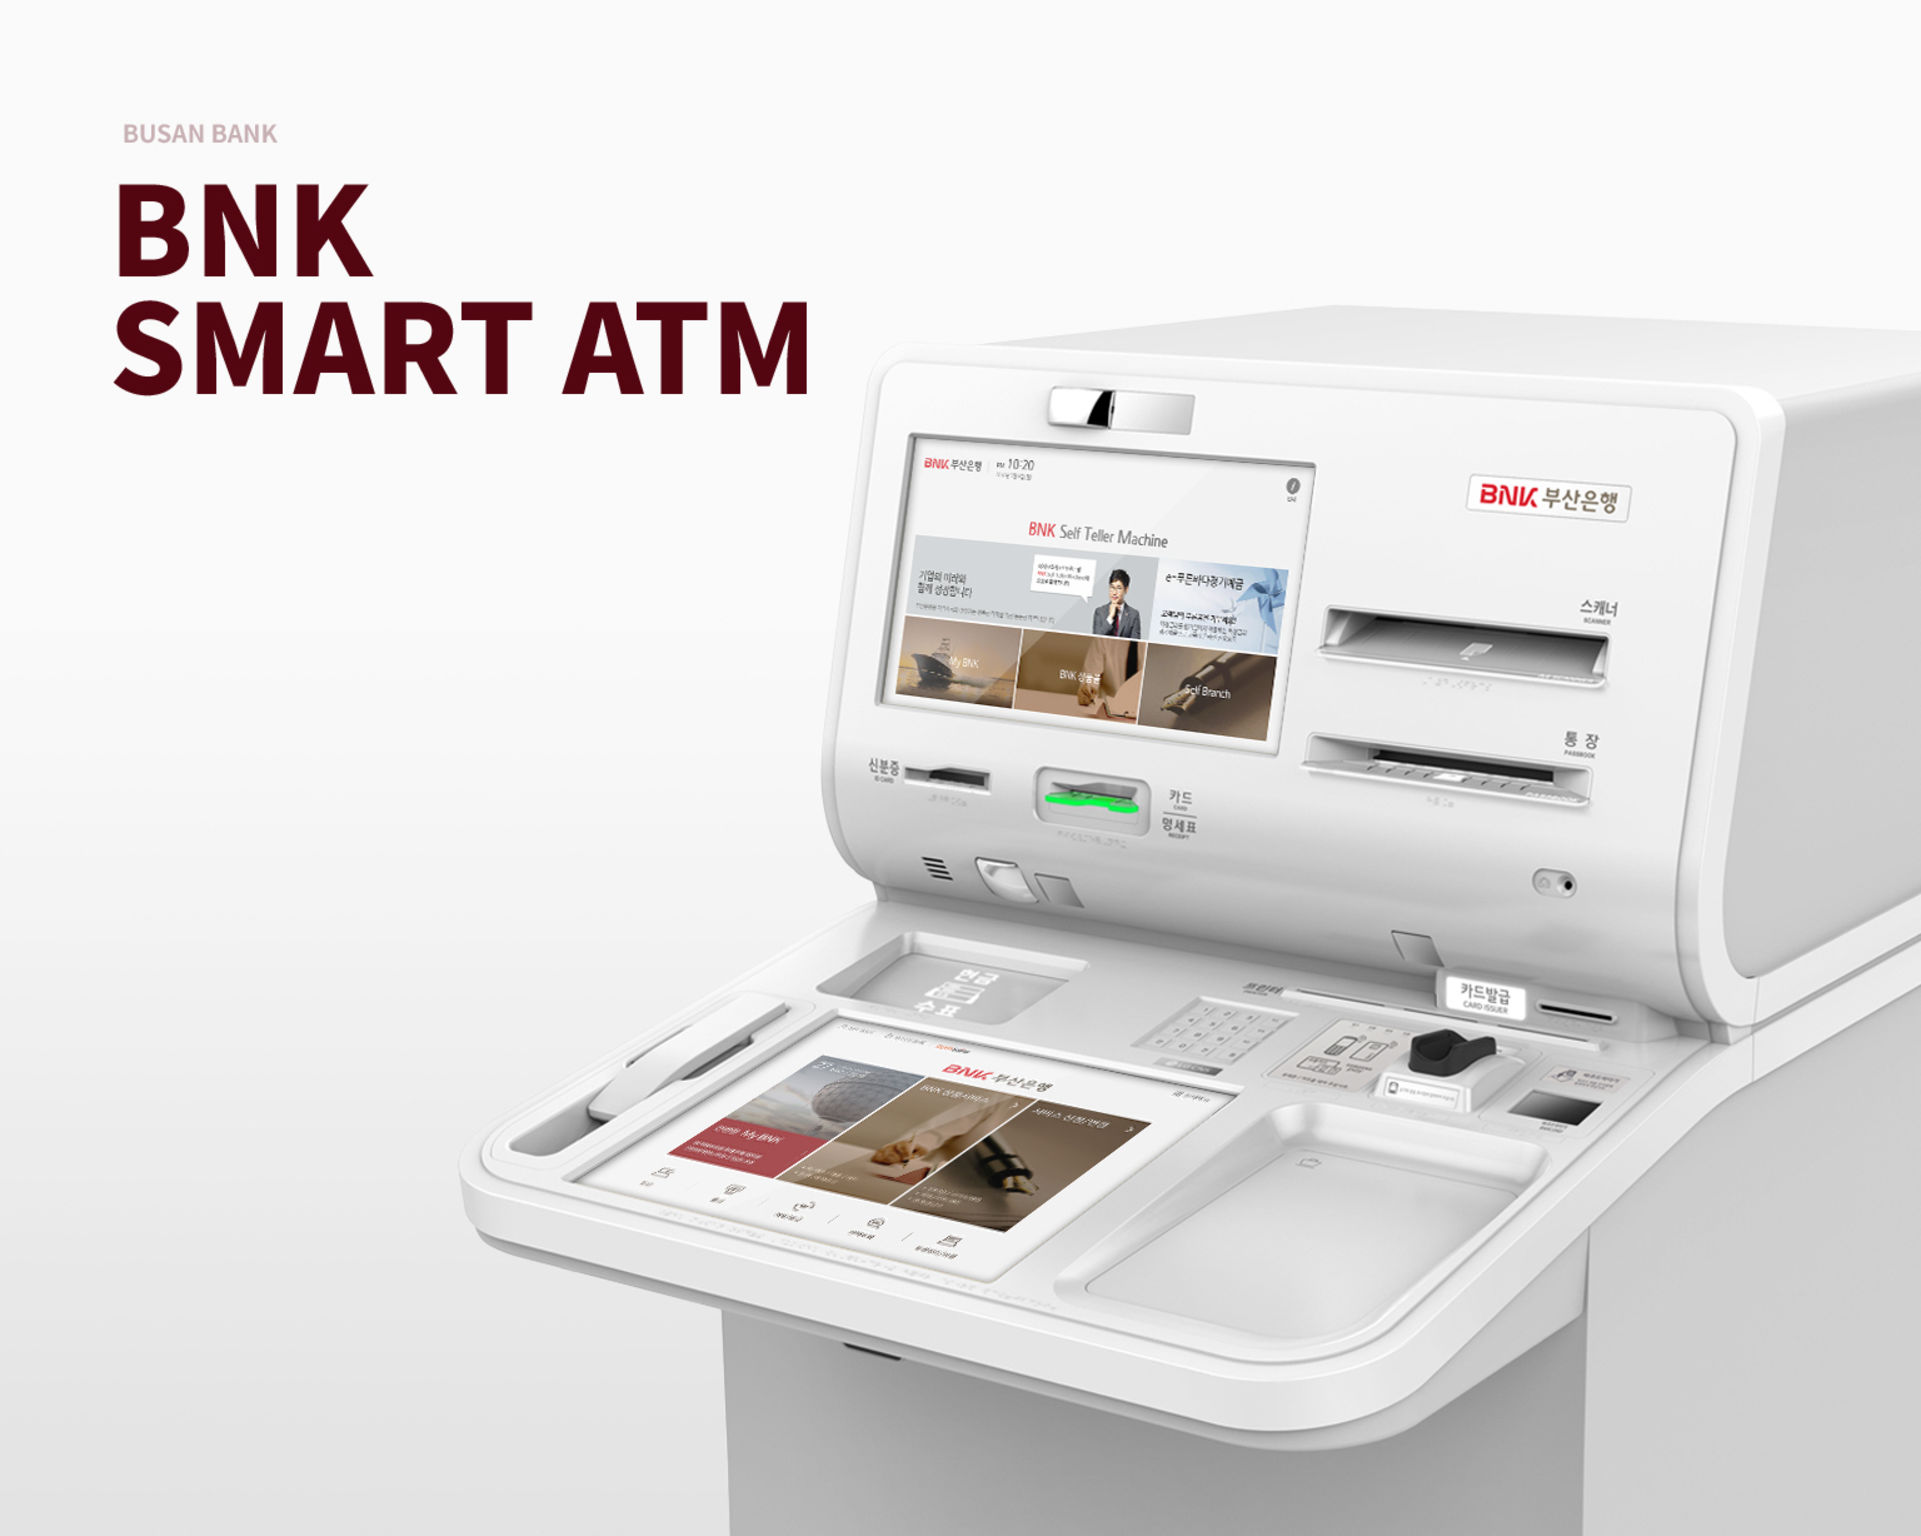 Digital Self Bank ATM